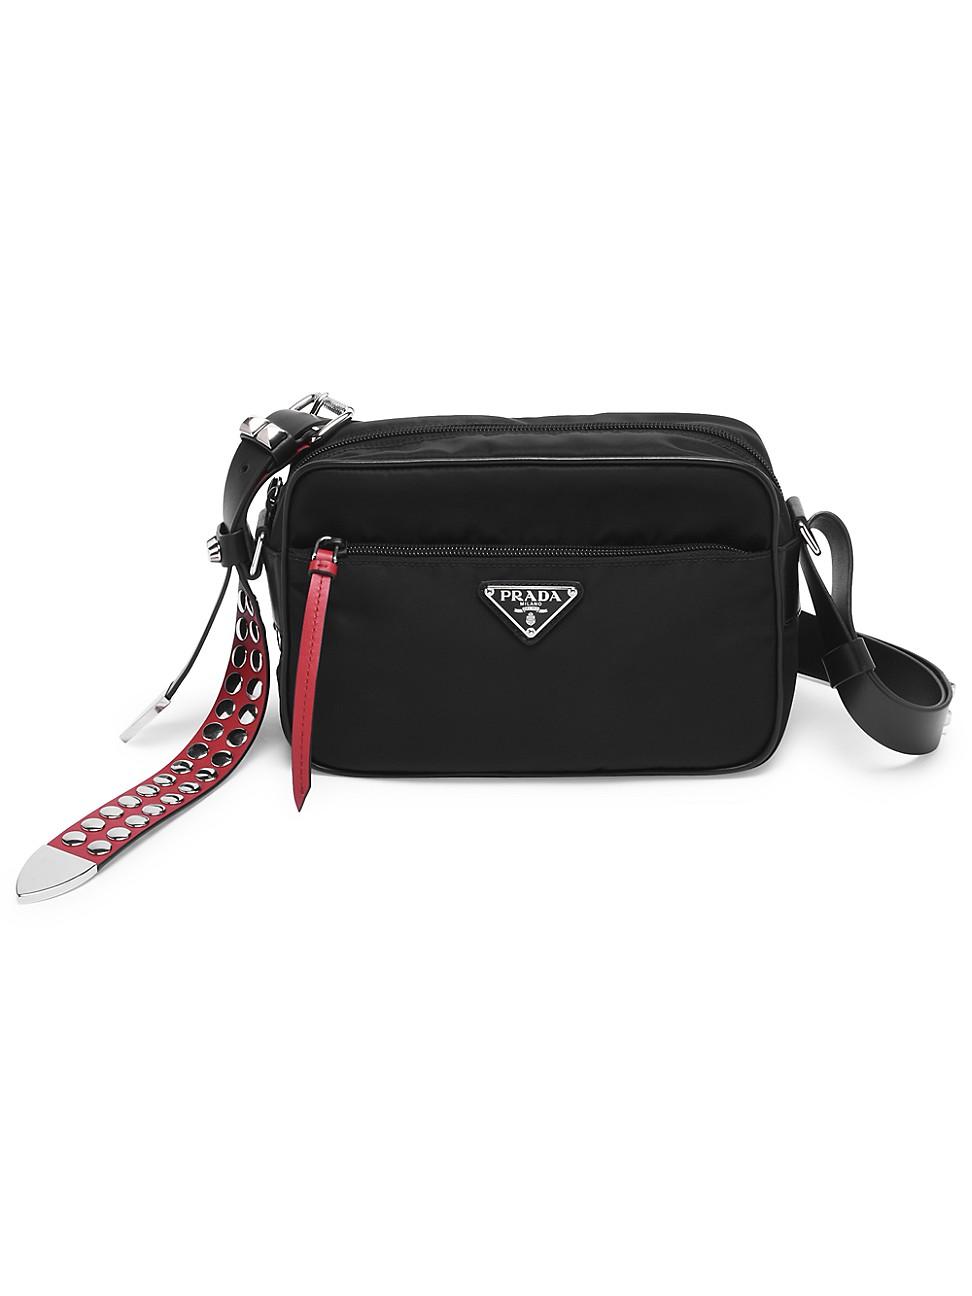 Prada Synthetic Vela Nylon Studded Shoulder Bag in Black Red (Black) - Lyst